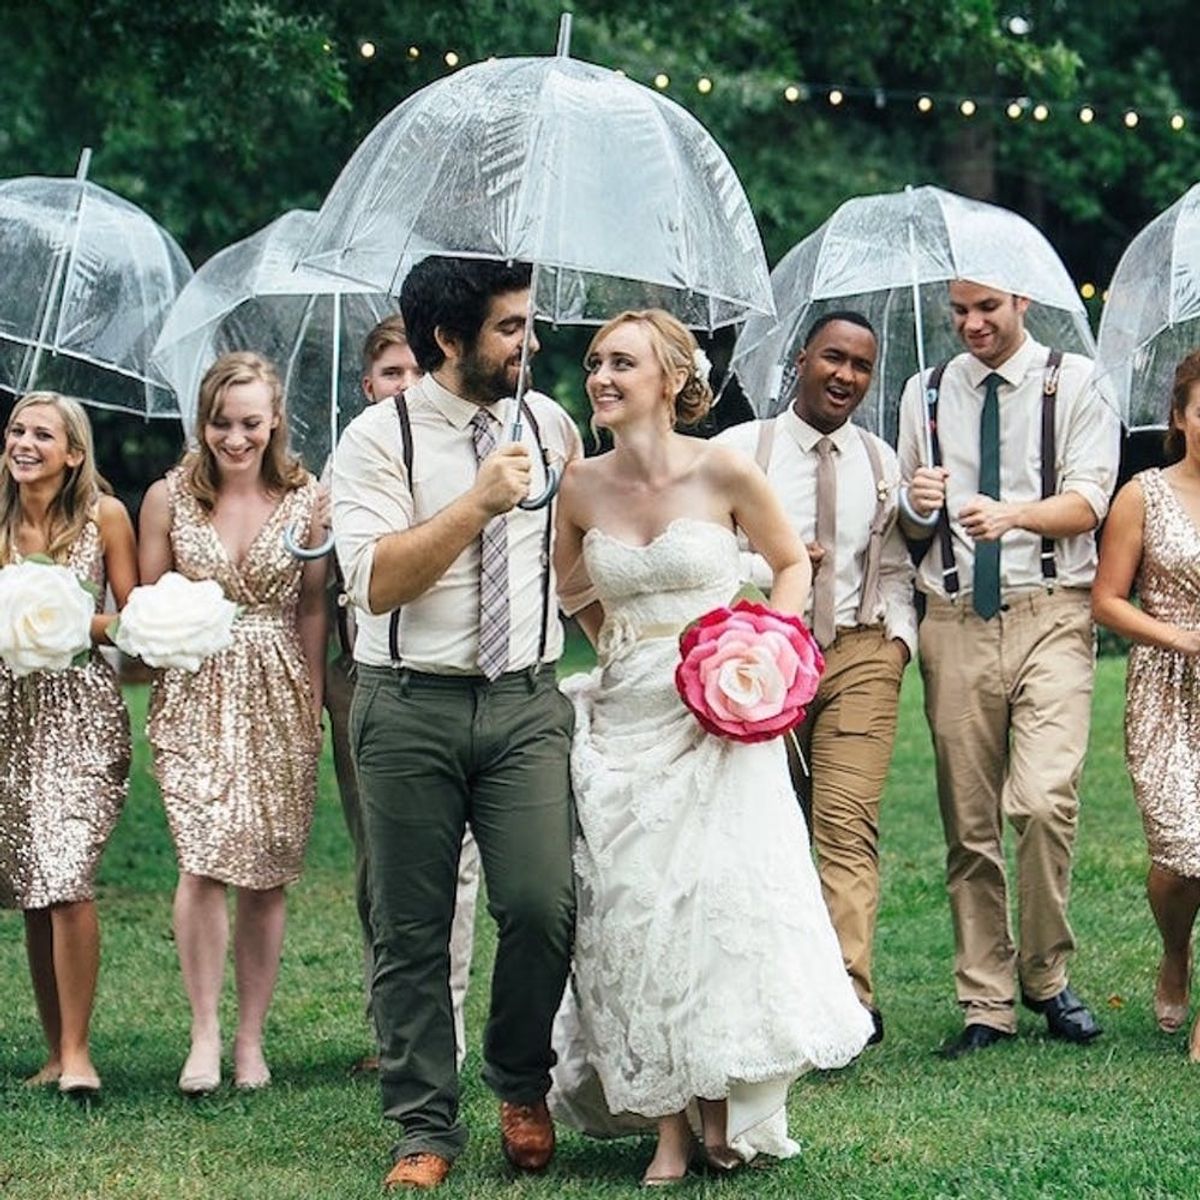 Romance + Fandom Collide at This Gorgeous, Geeky Georgia Wedding